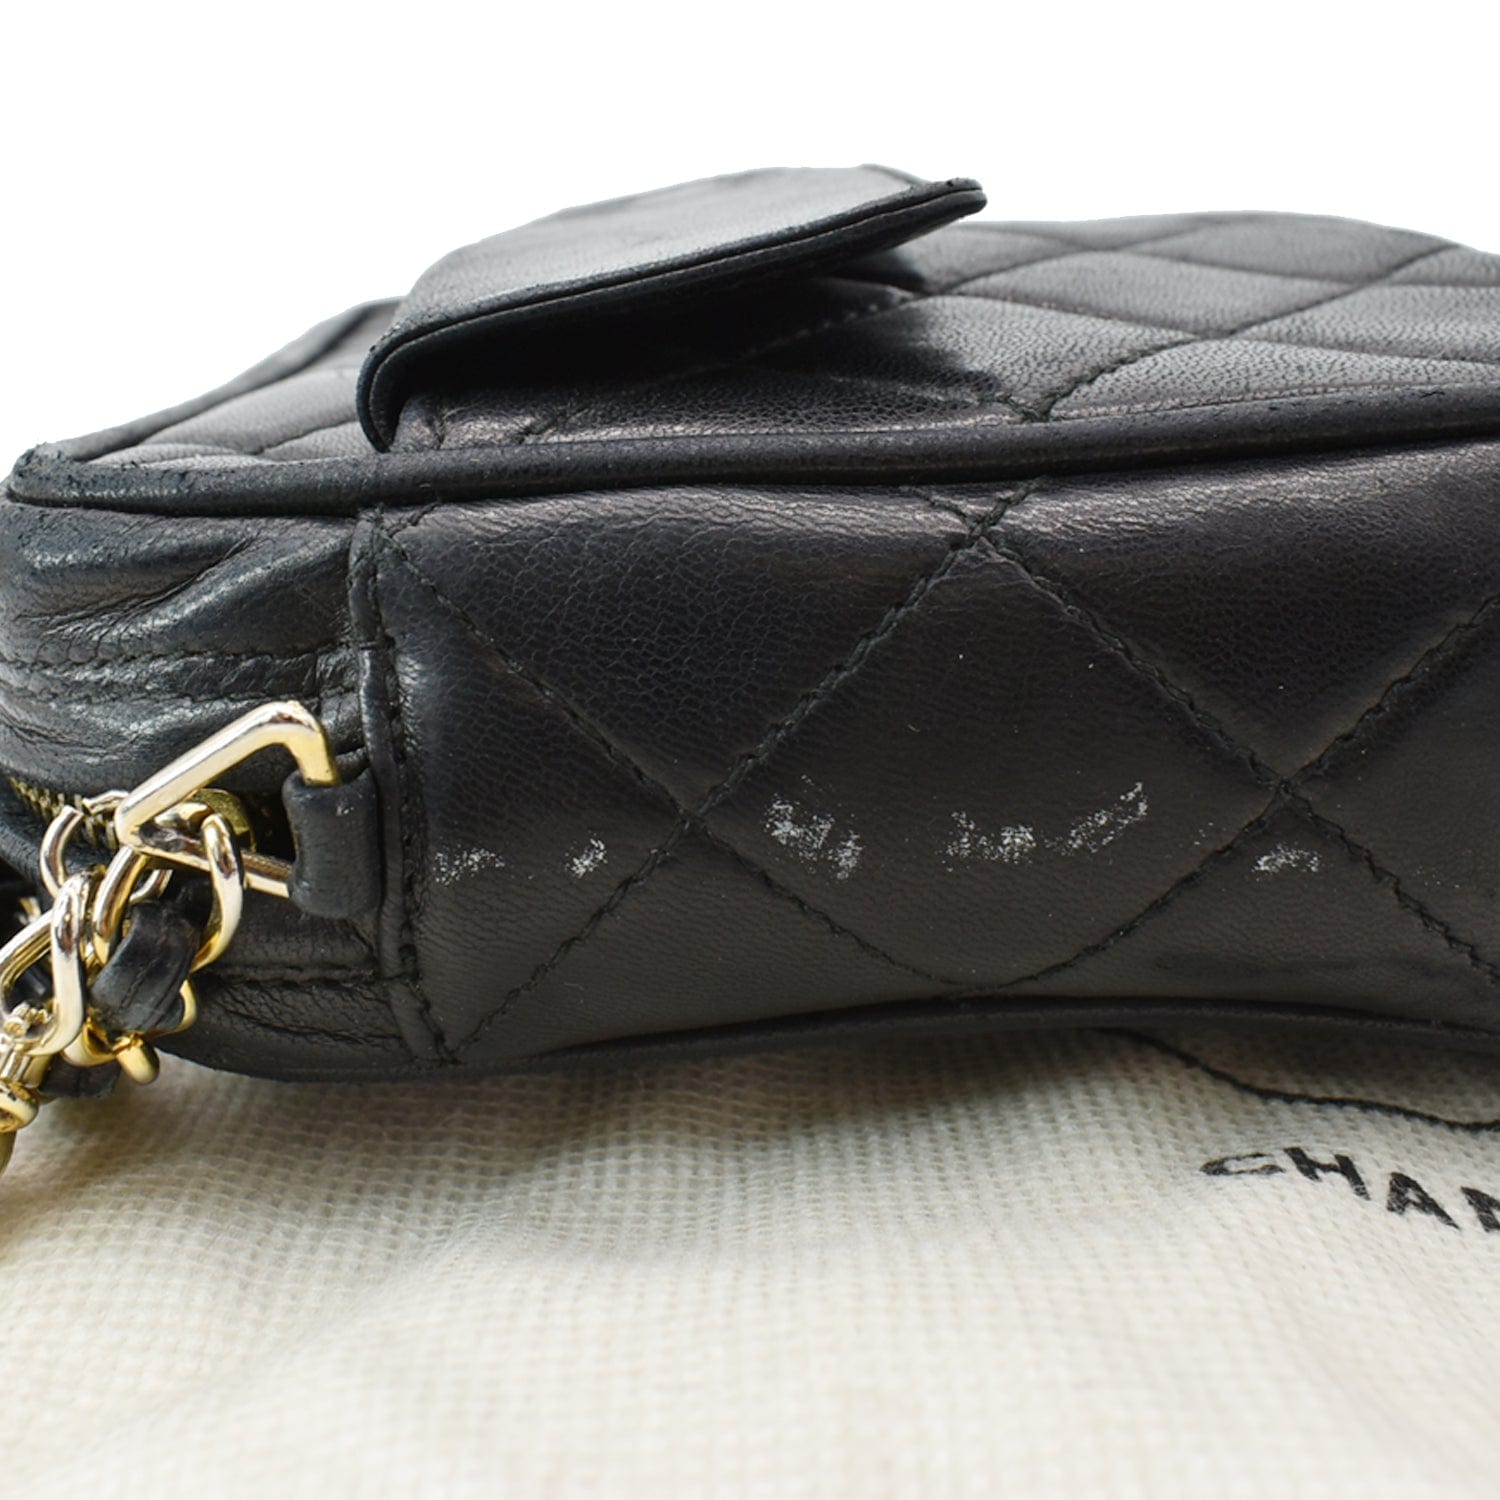 classic chanel lambskin flap bag black